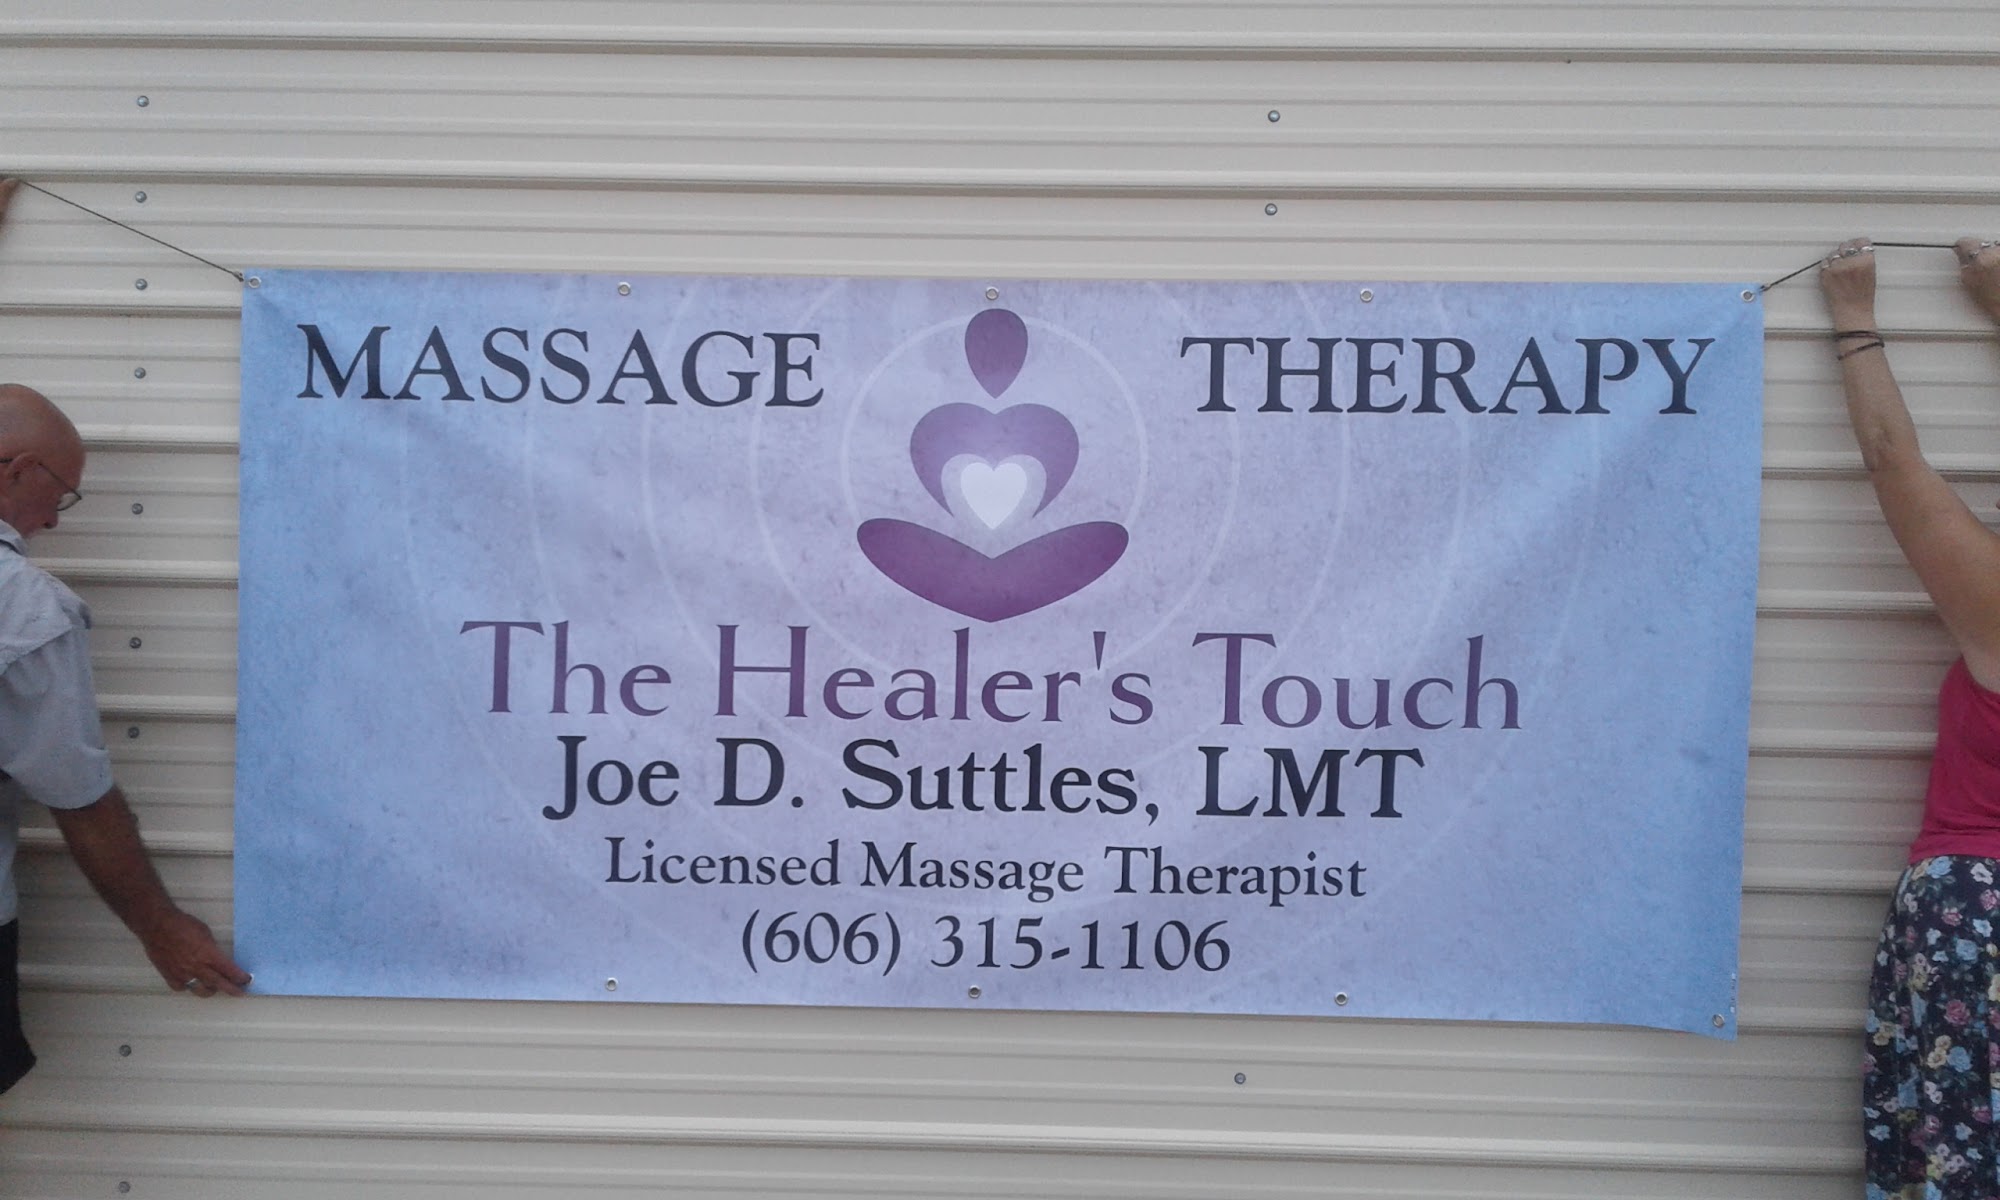 The Healer's Touch Holistic Massage & Botanica 279 E Main St Blair Building, Morehead Kentucky 40351